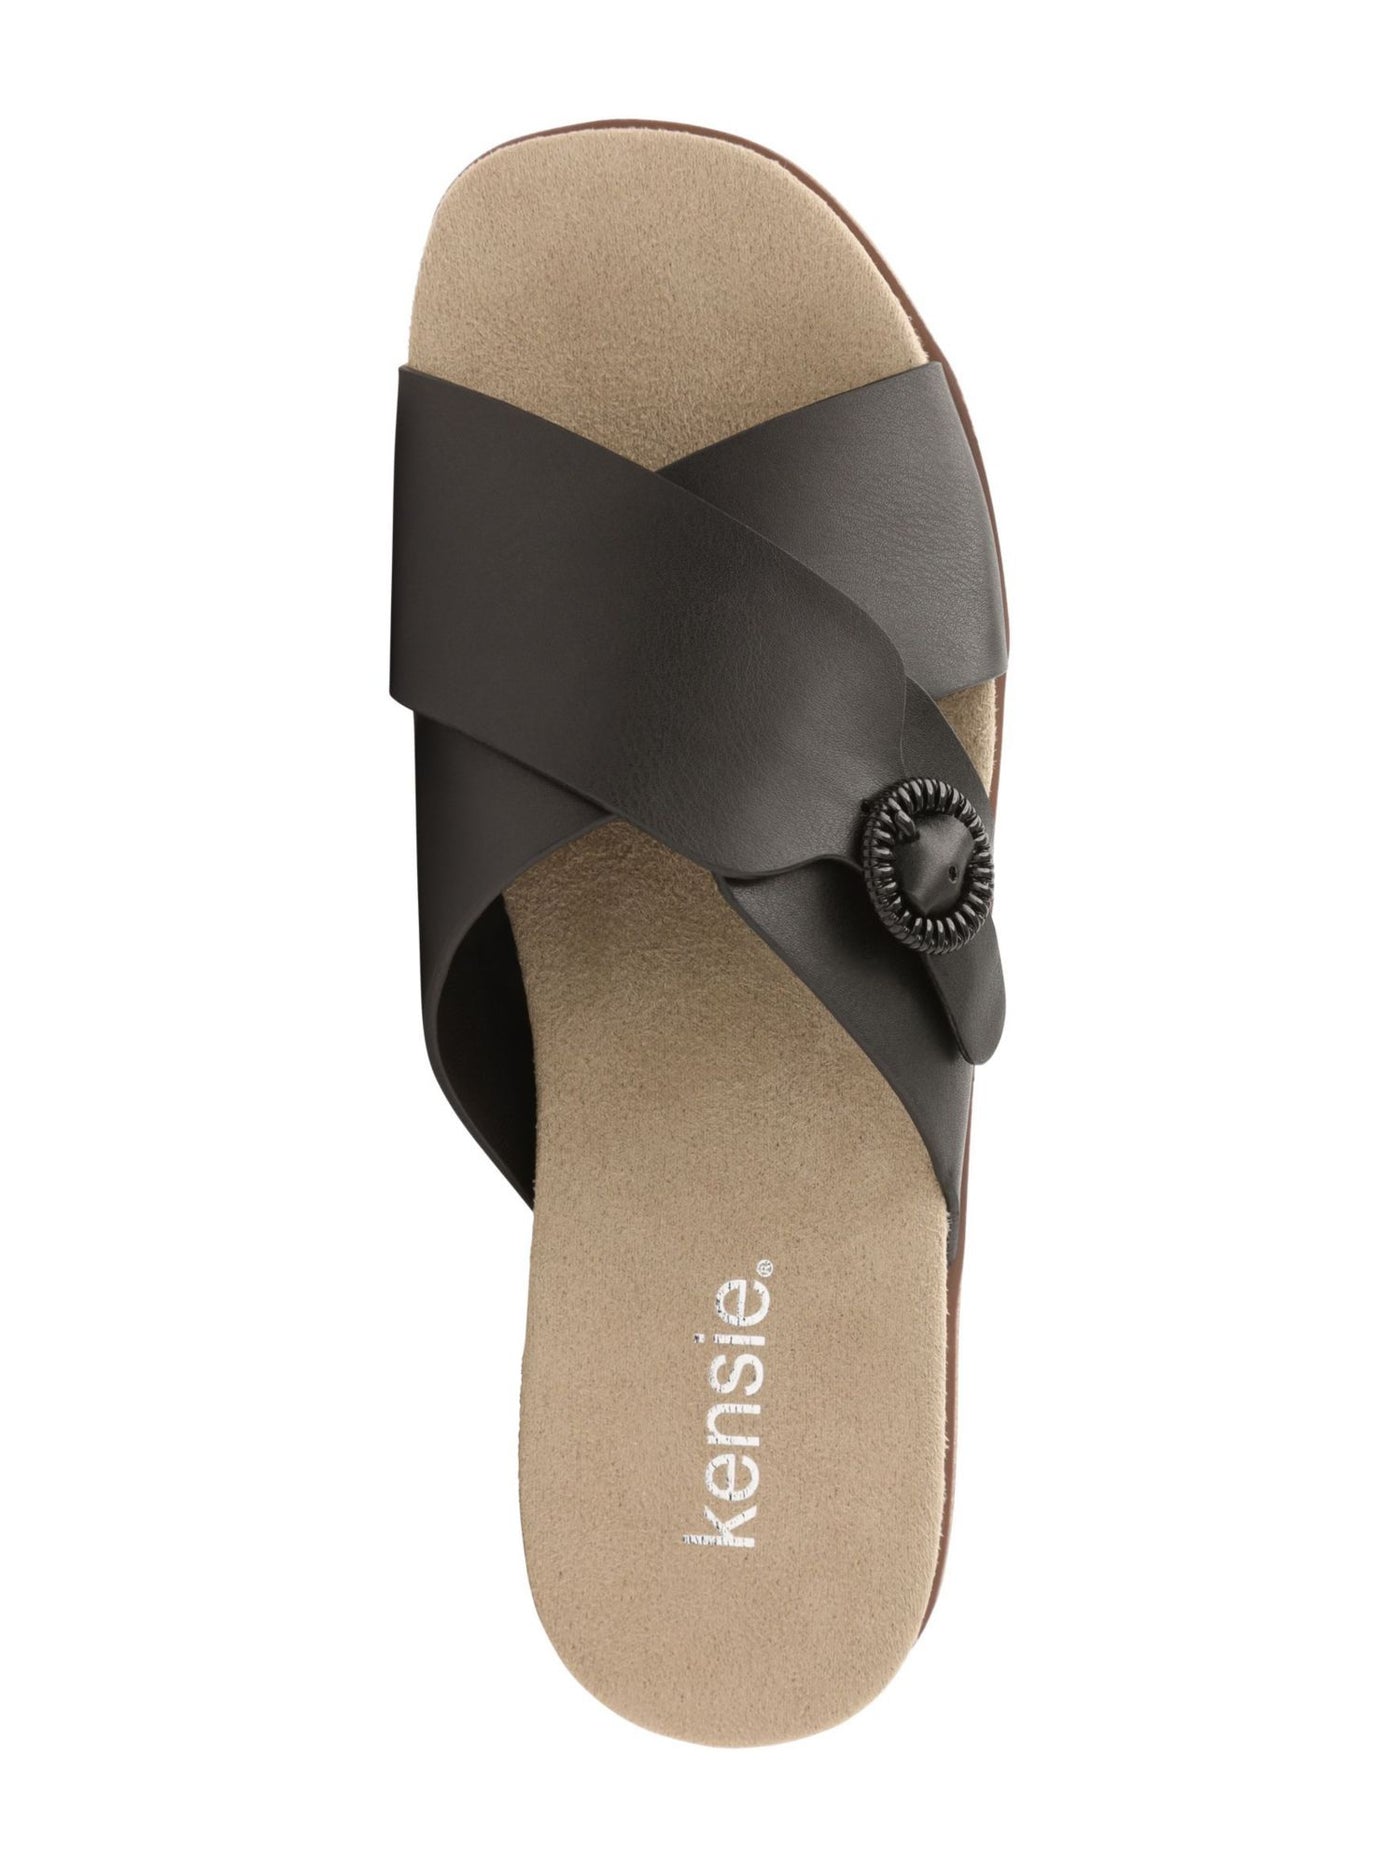 KENSIE Womens Black Crisscross Straps Metal Ornament Delicah Round Toe Slip On Slide Sandals Shoes 9.5 M